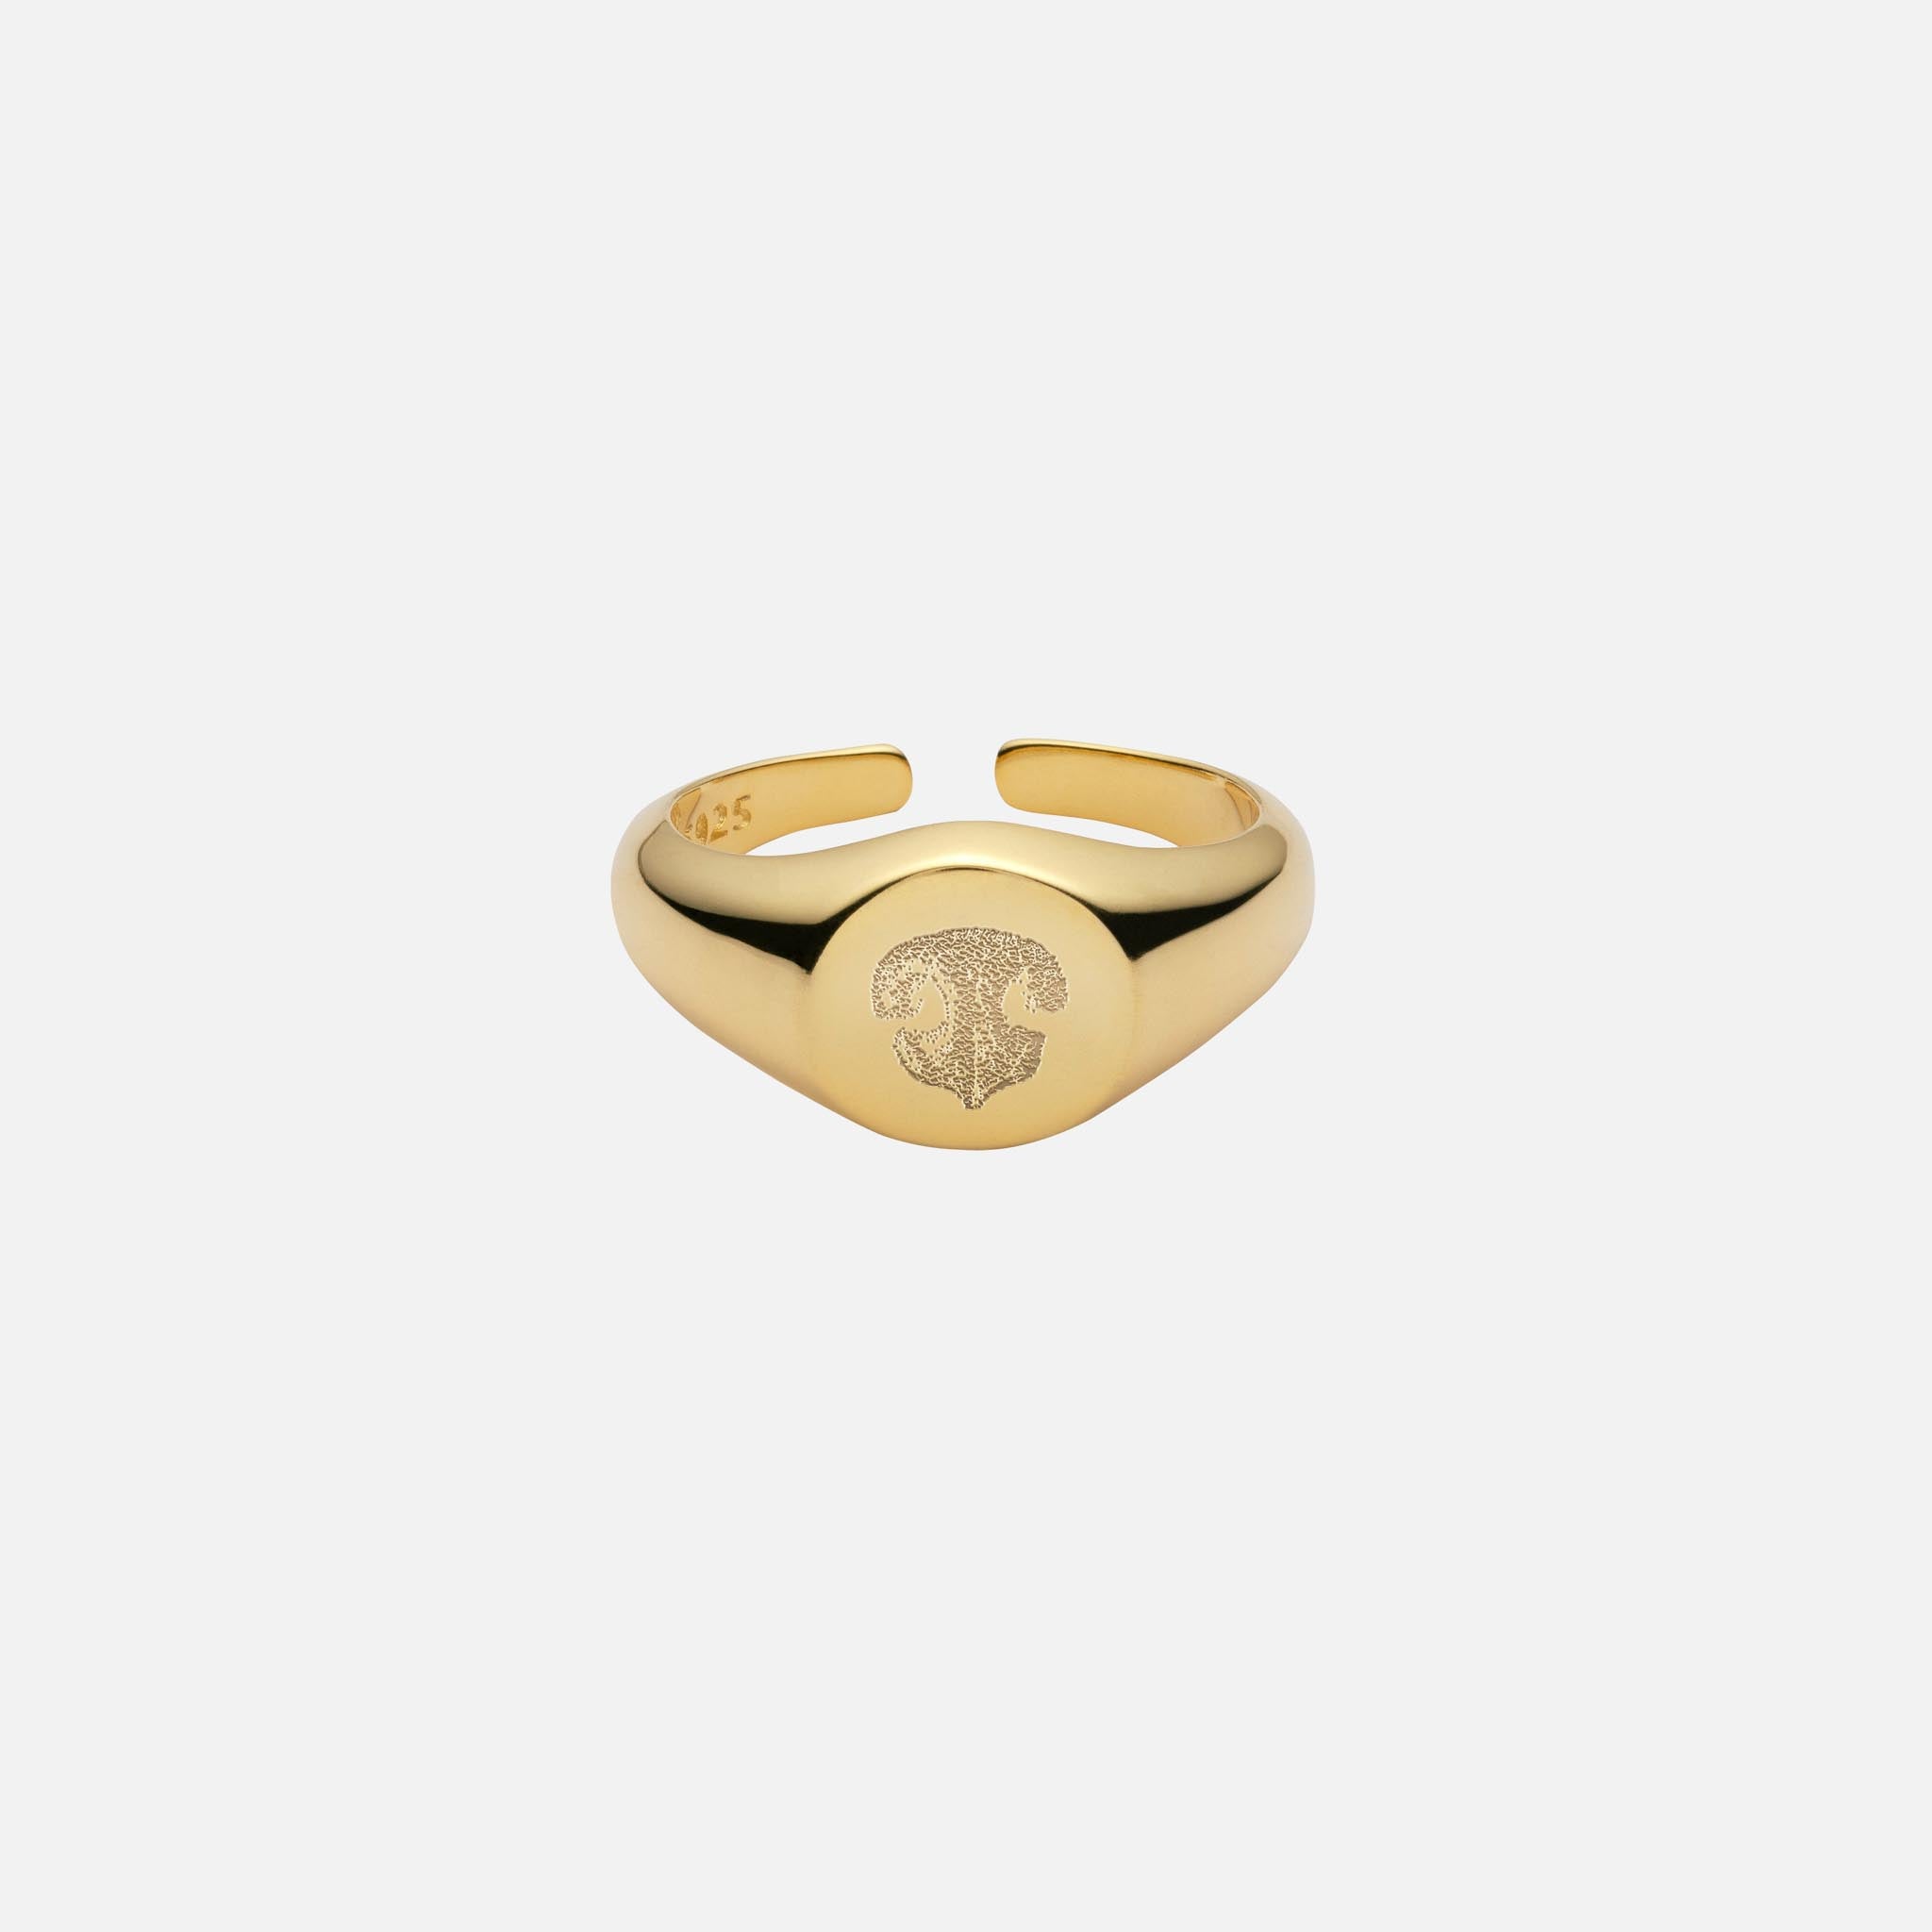 Ring mit rundem Siegel (groß) - Infinity Paws